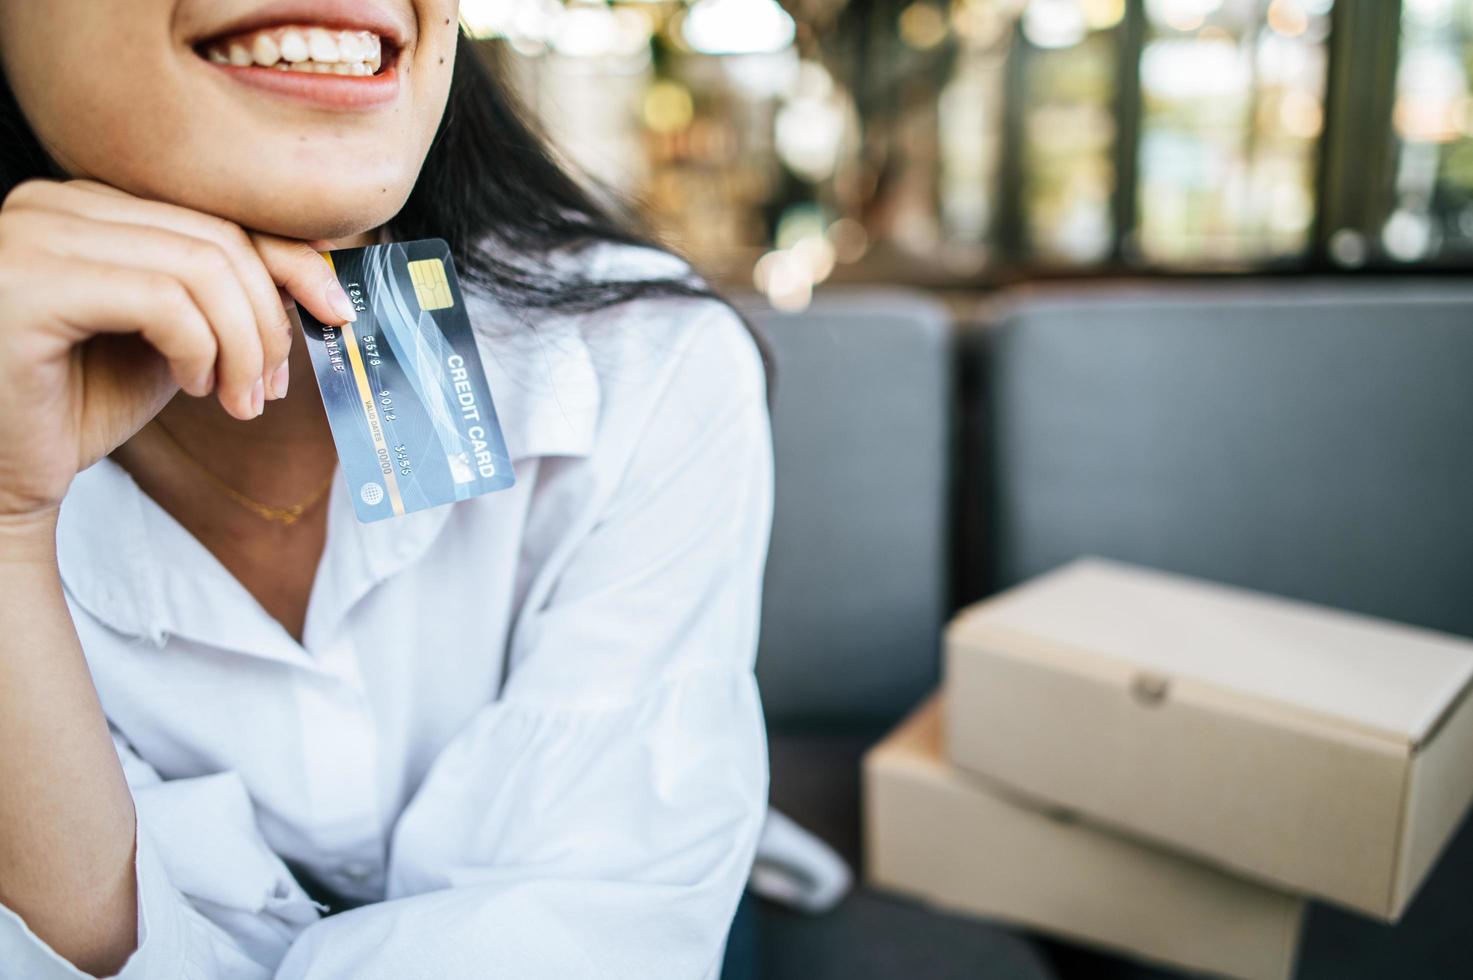 glimlach vrouw met creditcard foto